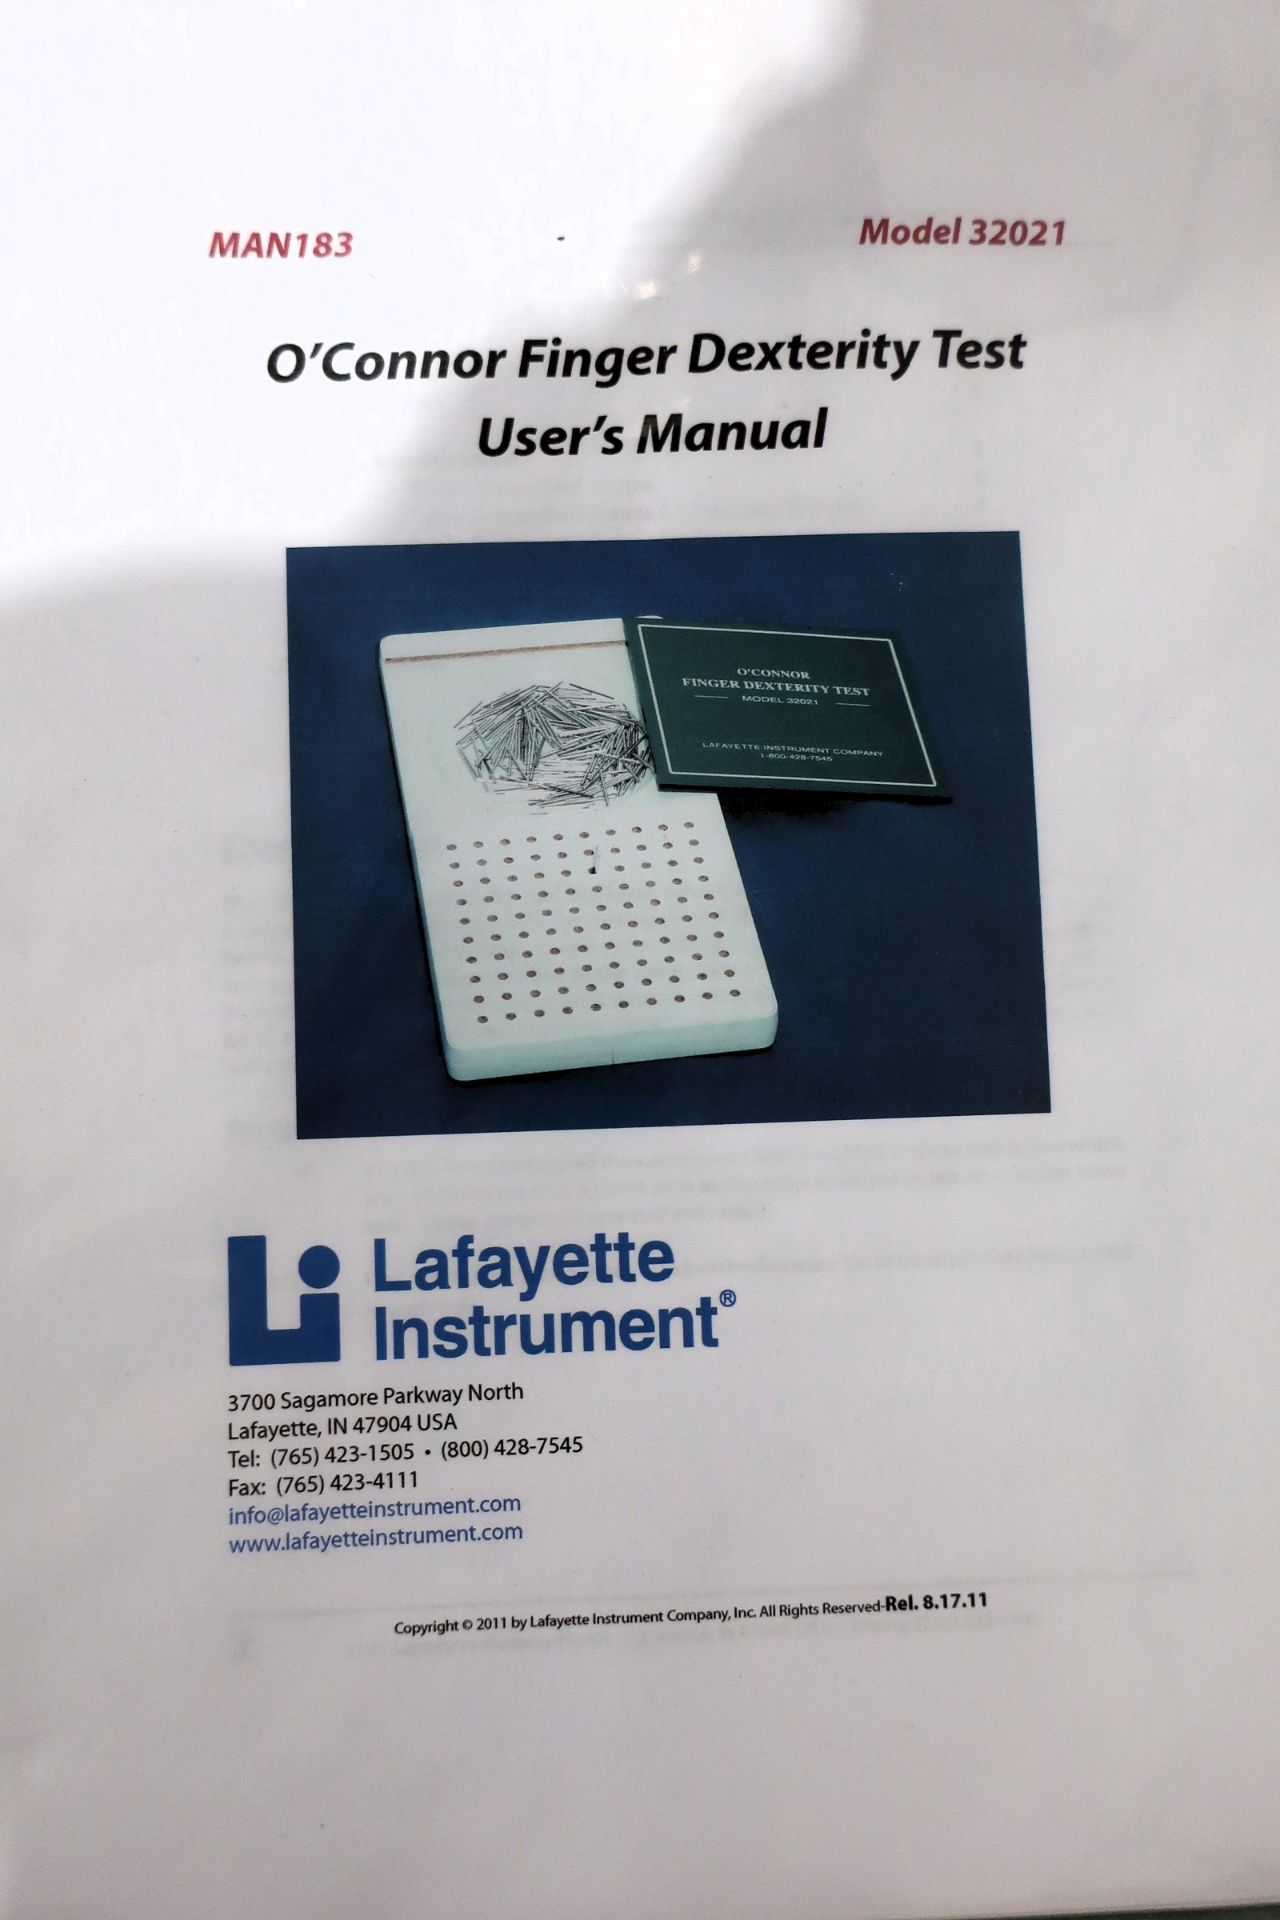 O'Connor Finger Dexterity Test Instrument Model 32021 - Image 3 of 3